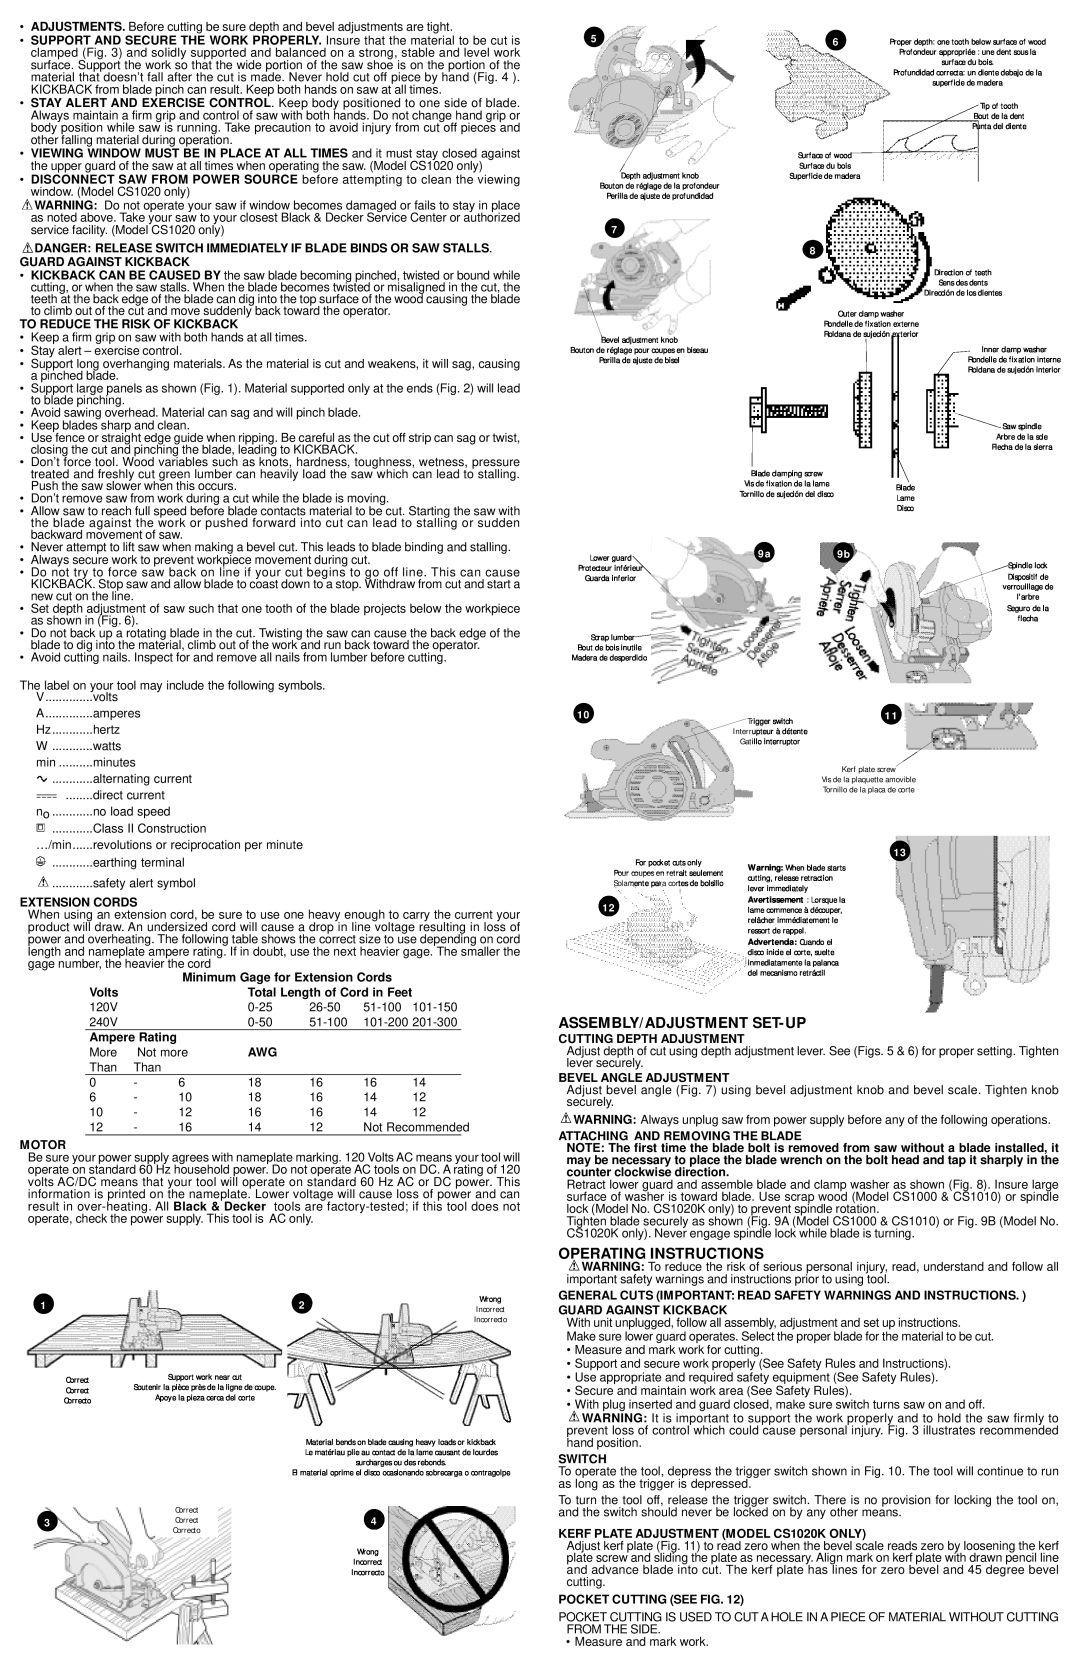 Black & Decker CS1020, CS1010 instruction manual Assembly/Adjustment Set-Up, Operating Instructions, 9a9b 